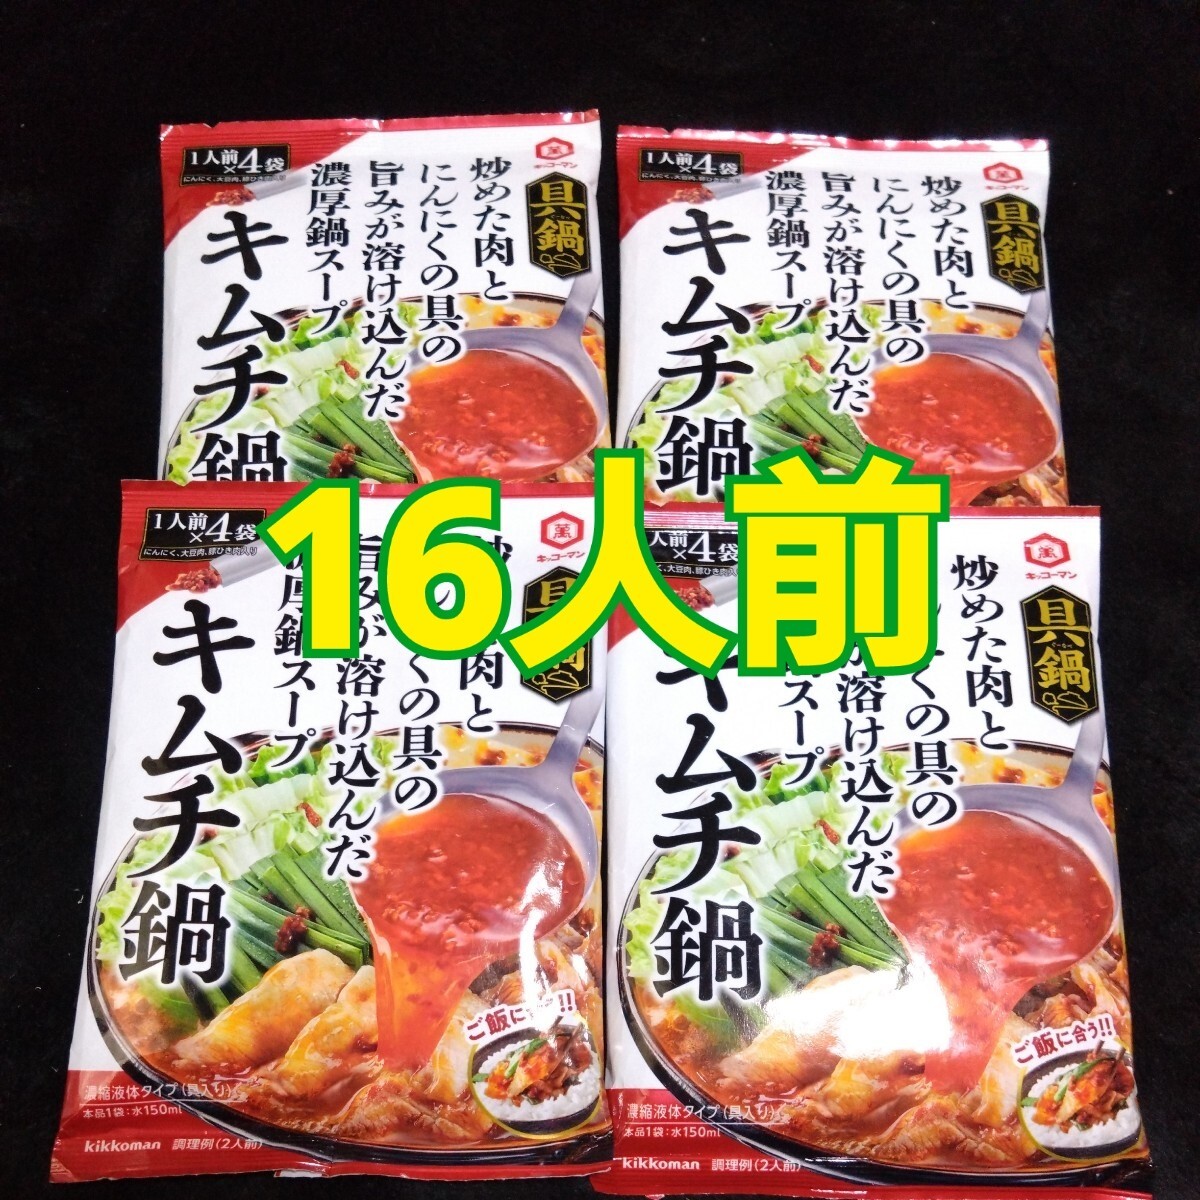  special price # 1558 jpy commodity #. saucepan kimchi saucepan 4 sack 